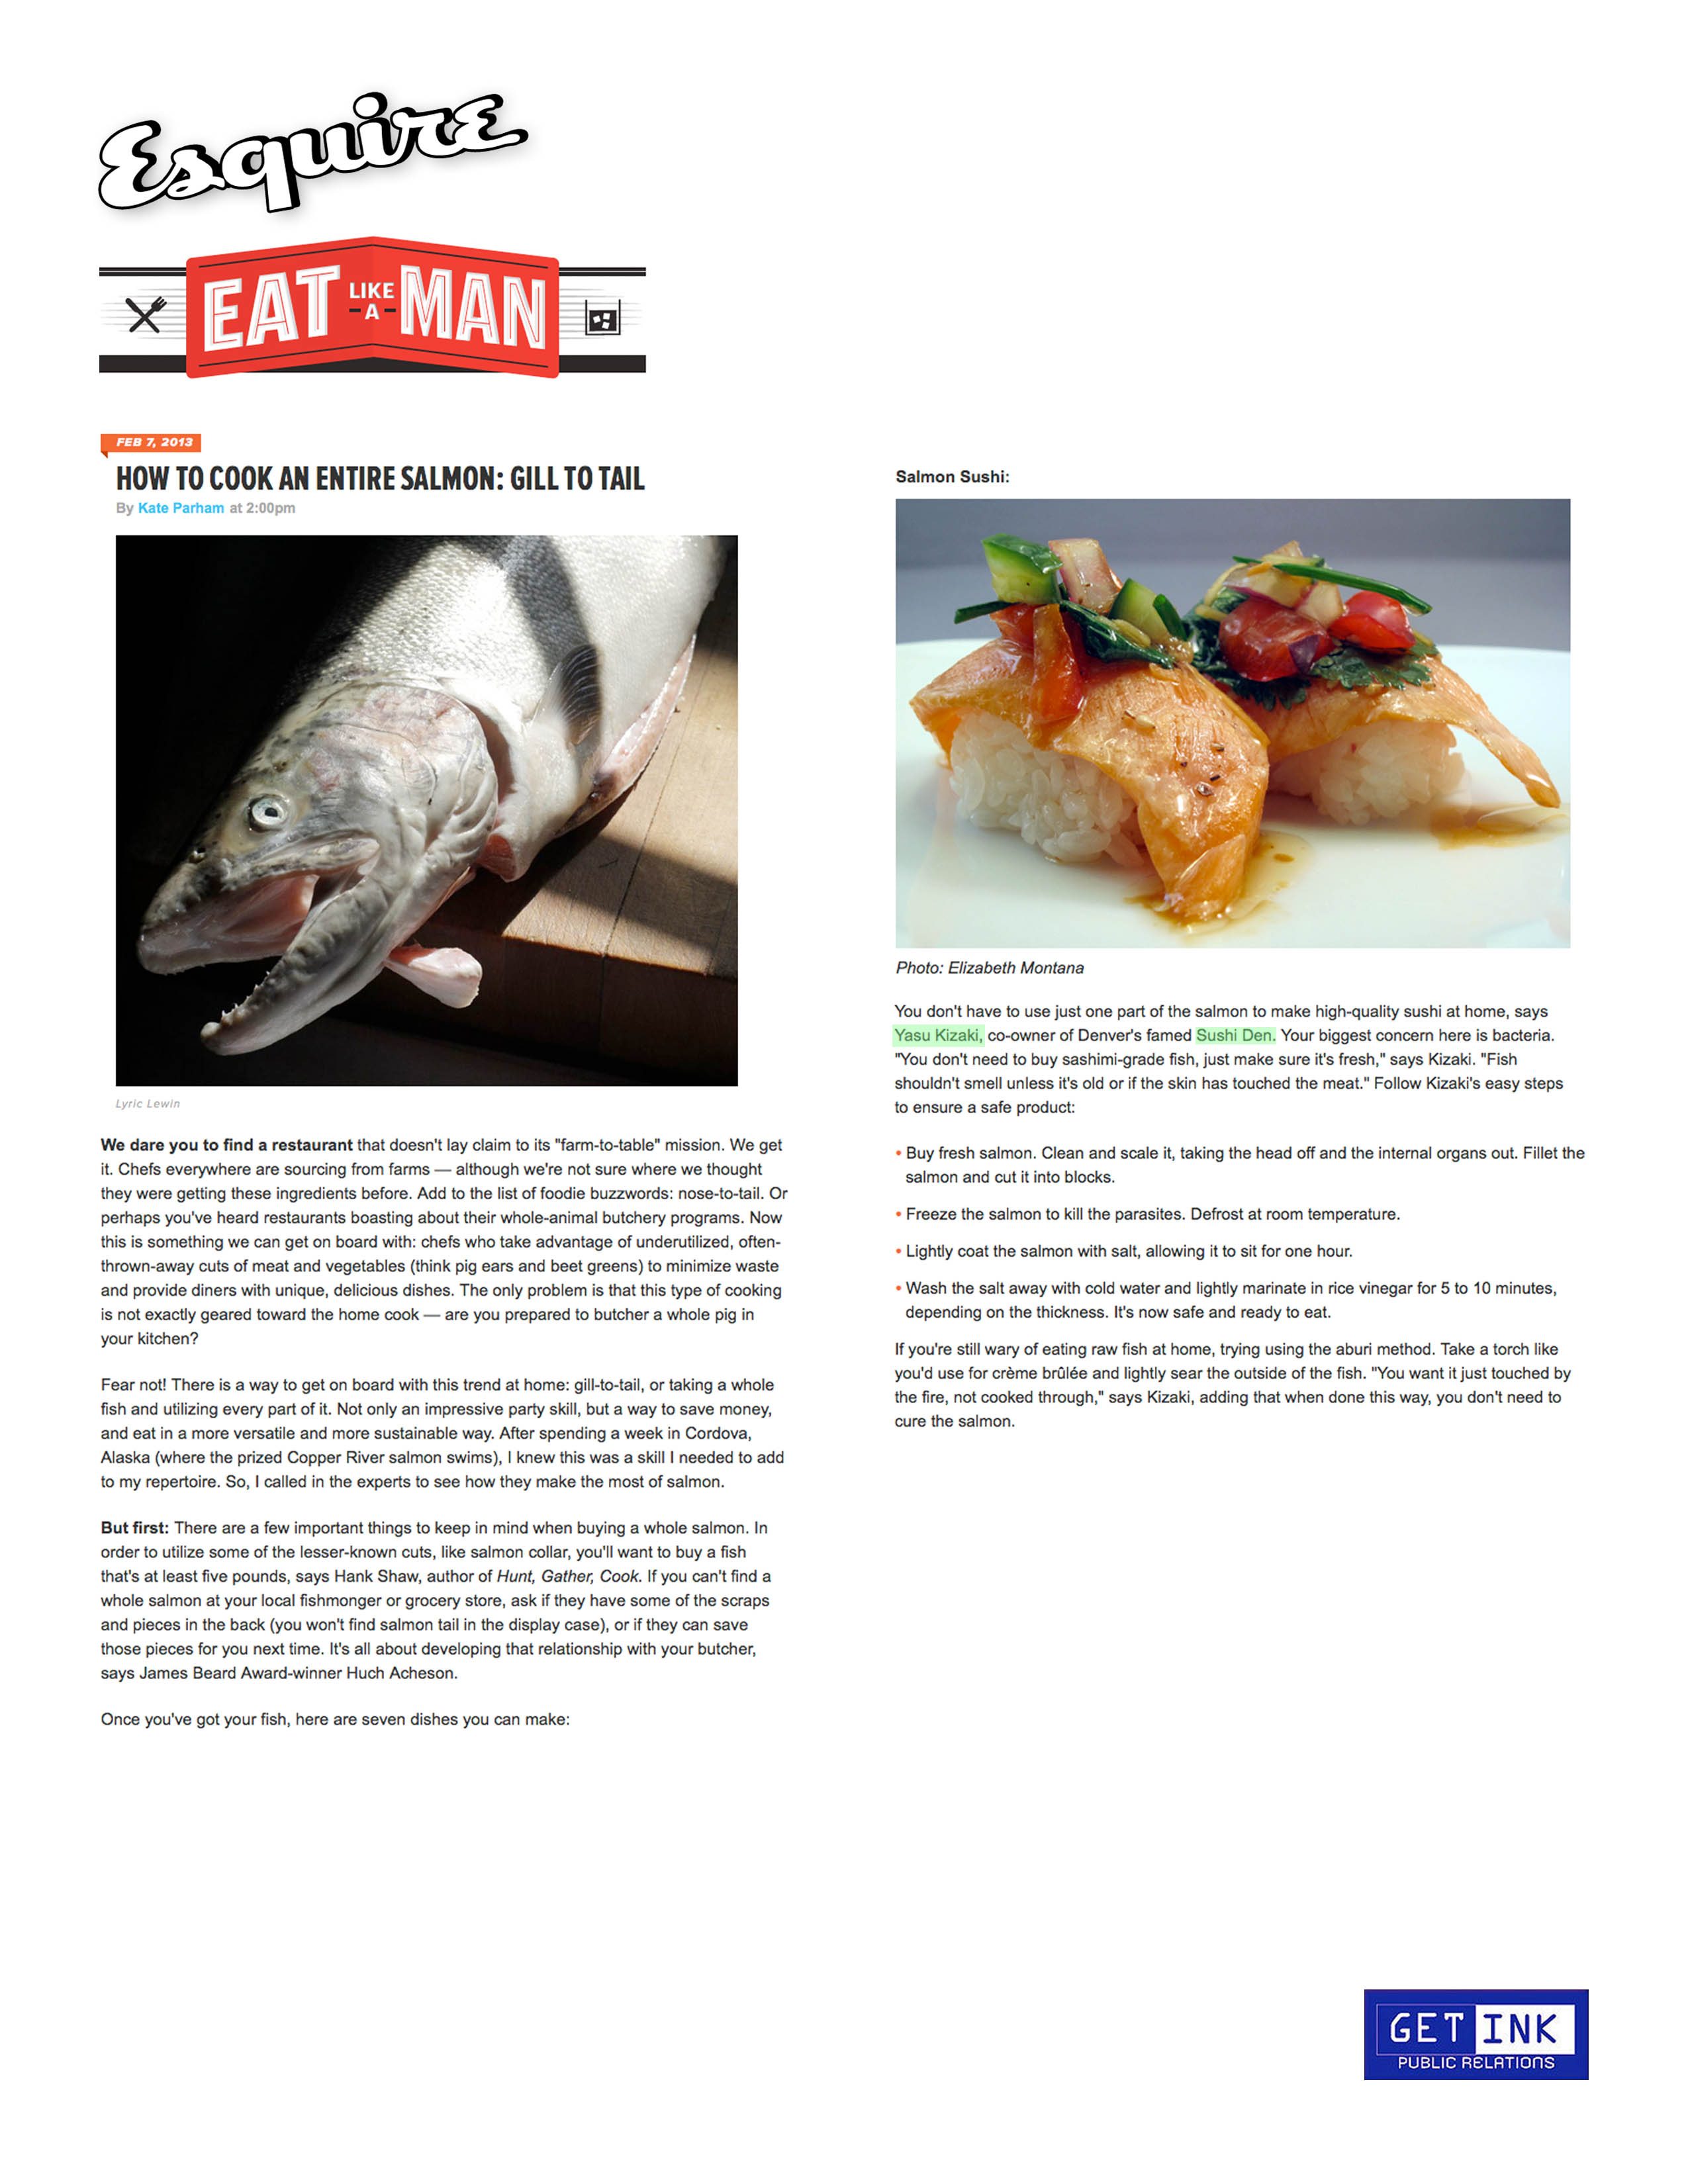 Sushi Den Denver Esquire magazine - Get Ink PR